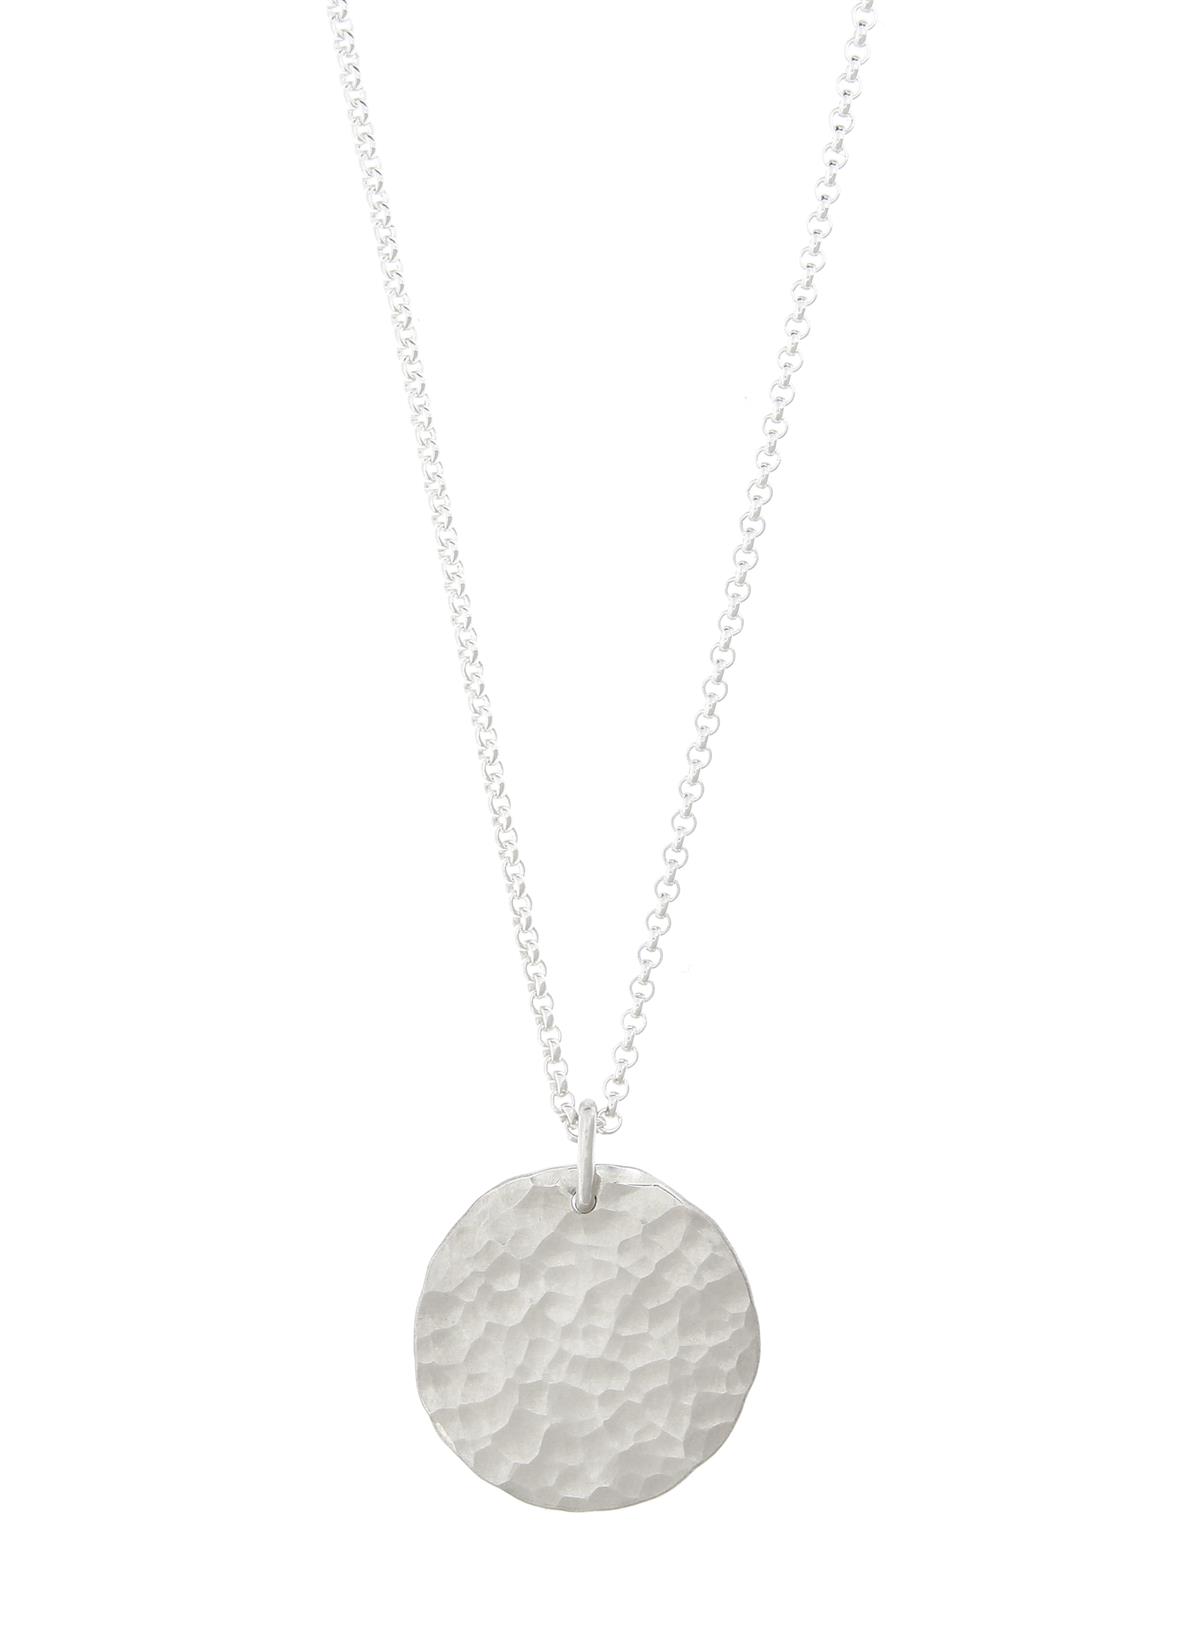 Katie g. Jewellery - Medallion Pendant - Sterling silber - LARGE 17mm - Medallion um 140€ und kette ab 30€